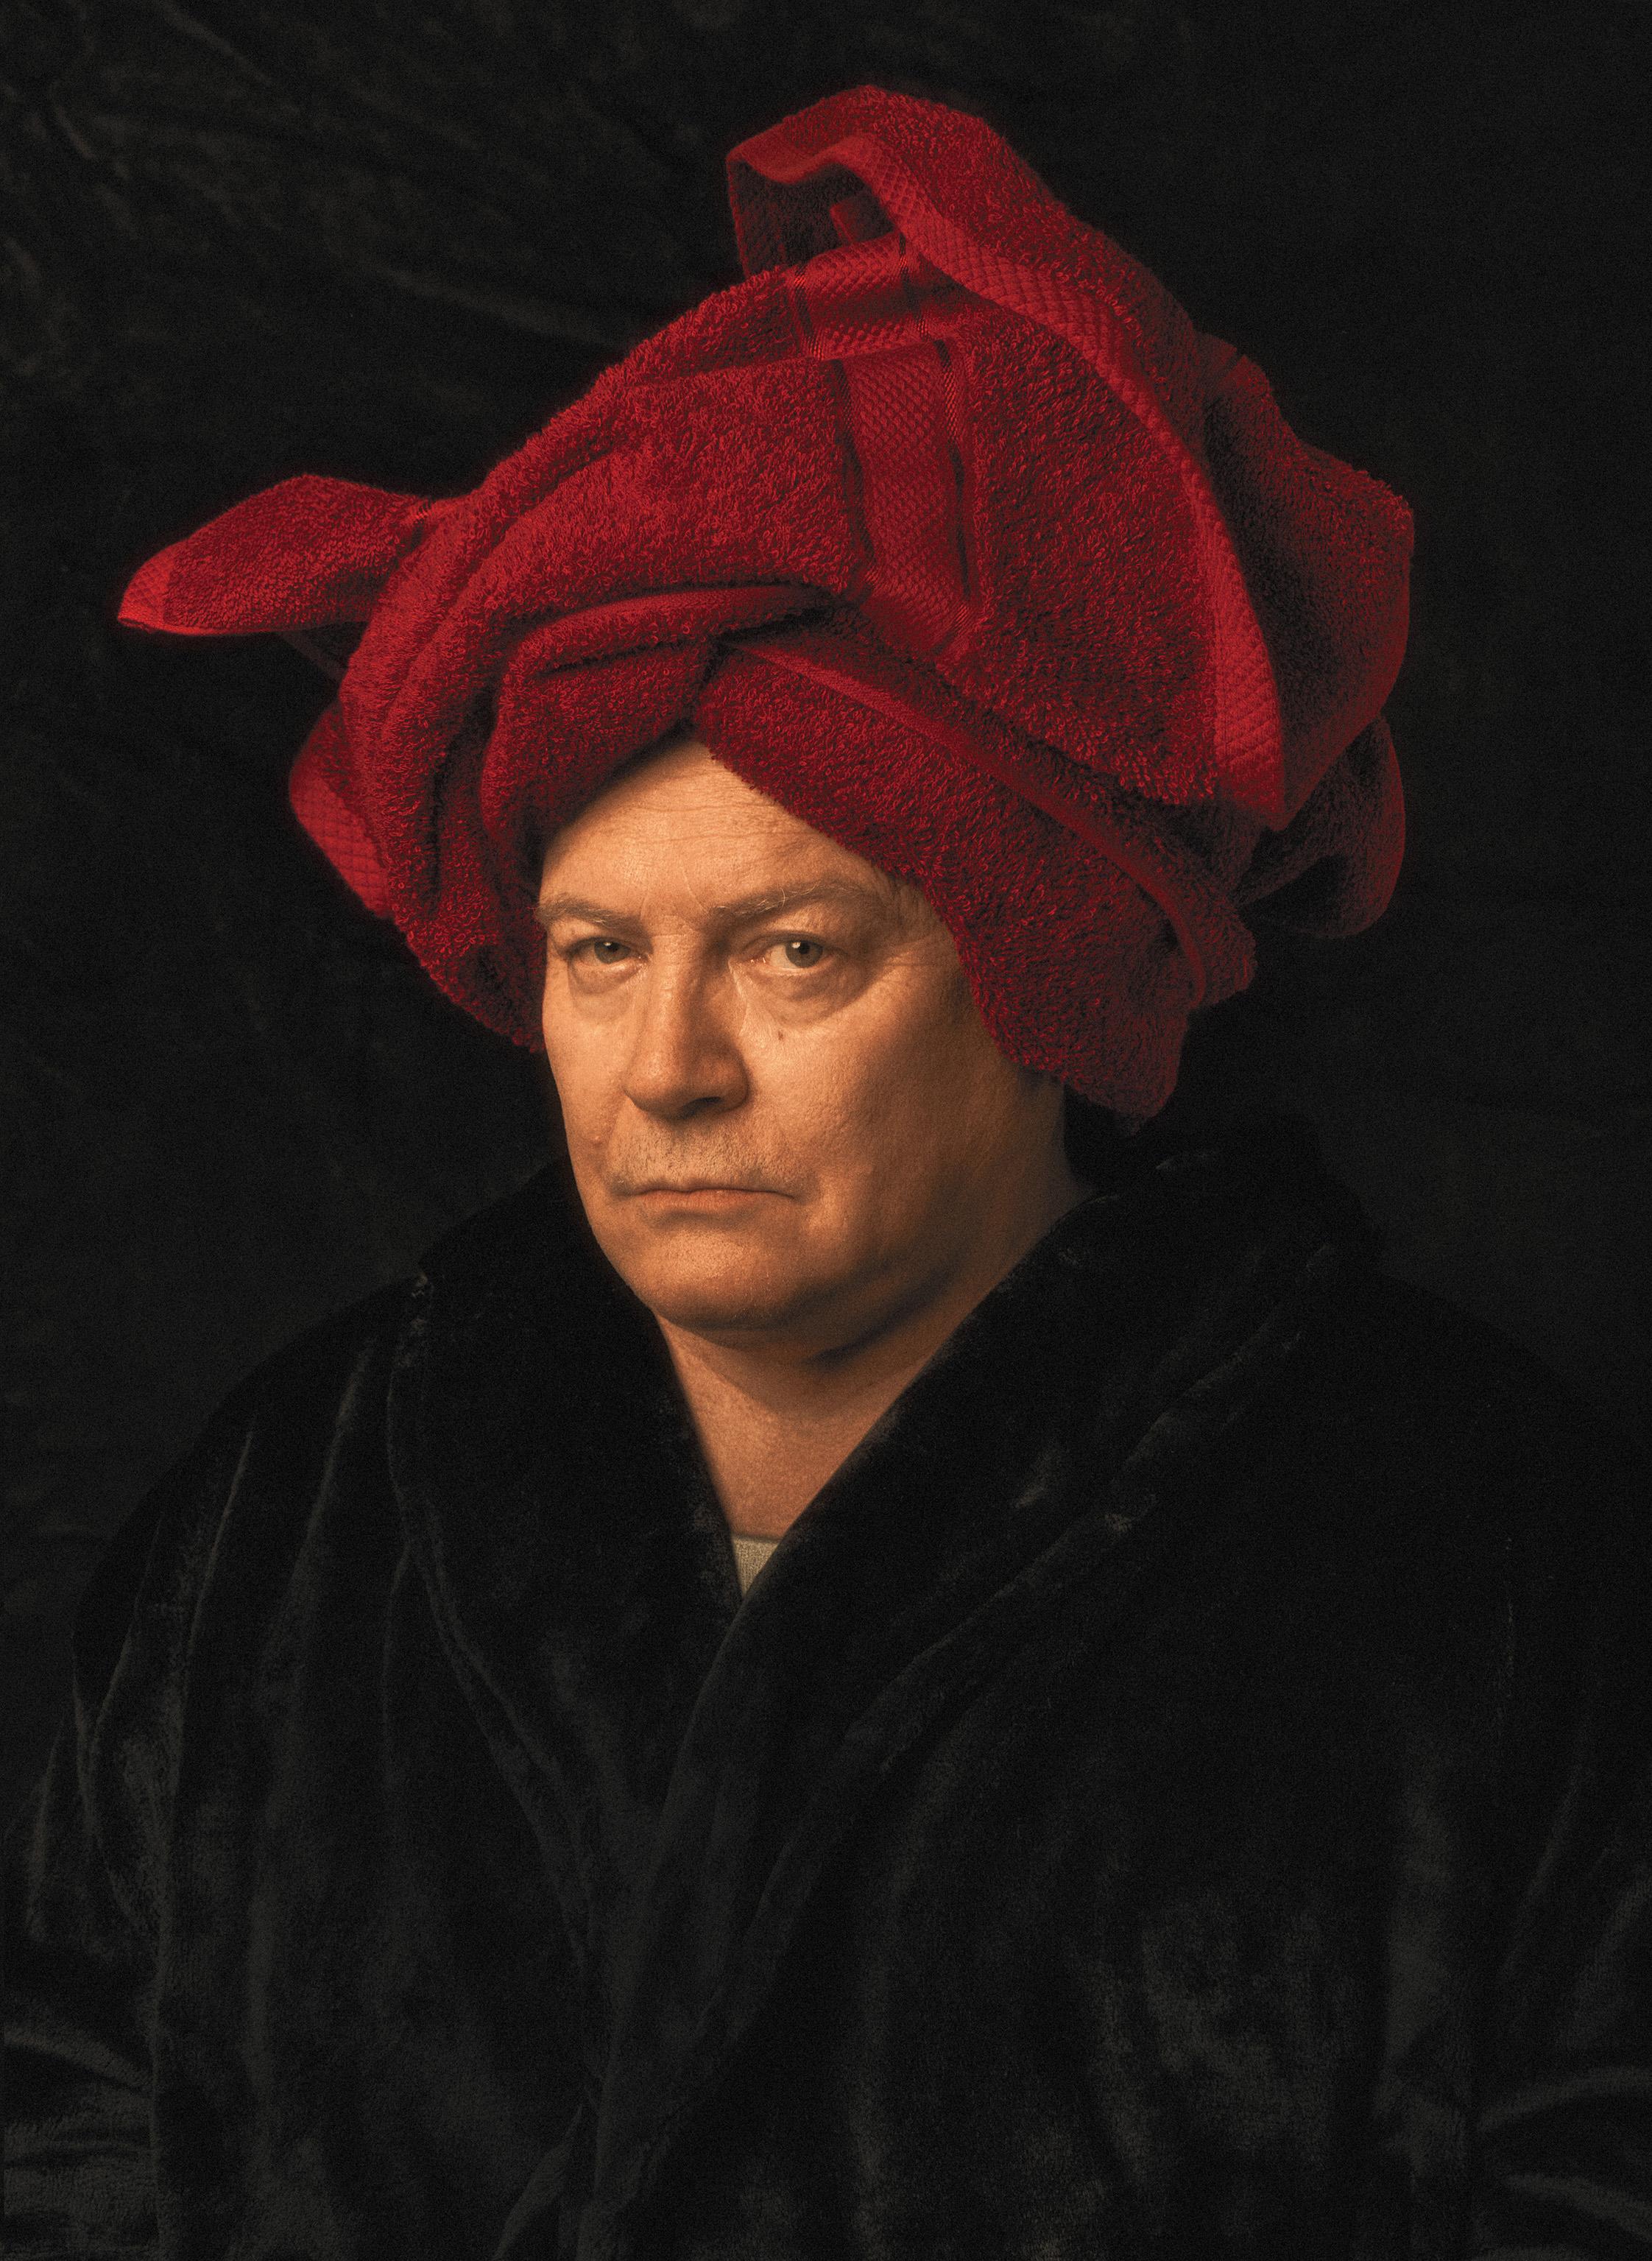 George McLeod Portrait Print – Jan van Eyck-Porträt eines Mannes 1433 (2021), Jan van Eyck